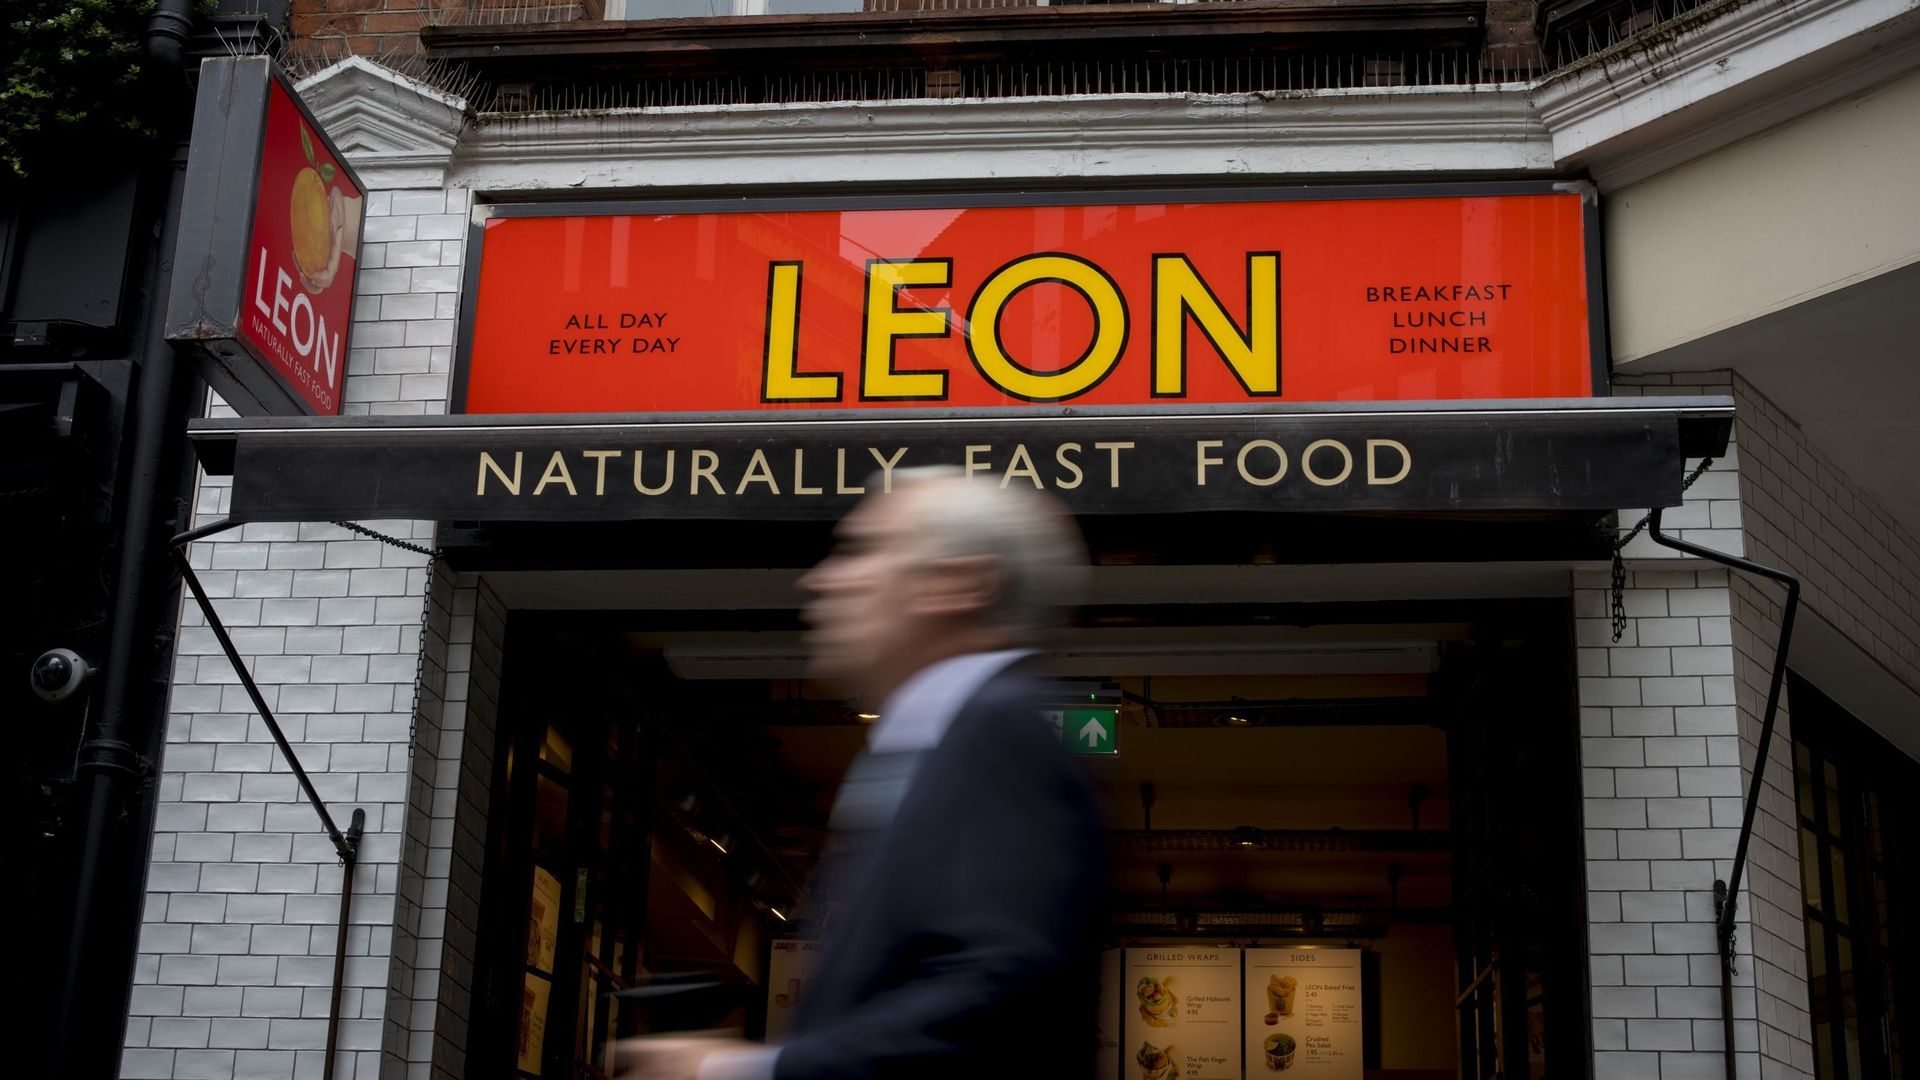 La chaîne britannique de fast-food Leon va convertir ses restaurants en mini-supermarchés afin de s'adapter à la crise du coronavirus